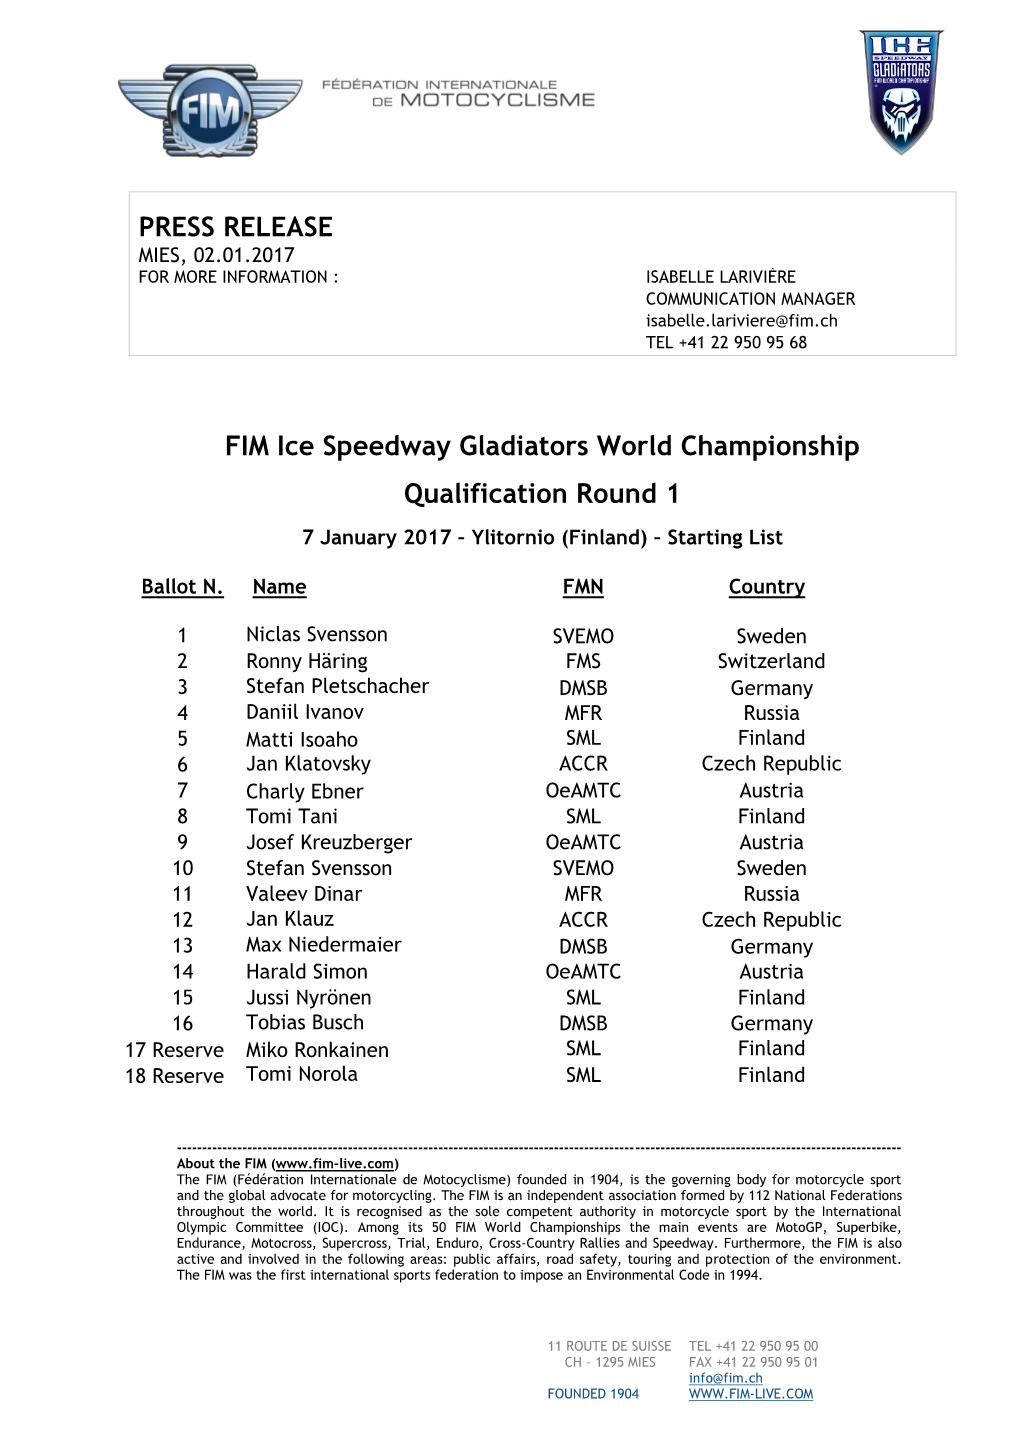 PRESS RELEASE FIM Ice Speedway Gladiators World Championship